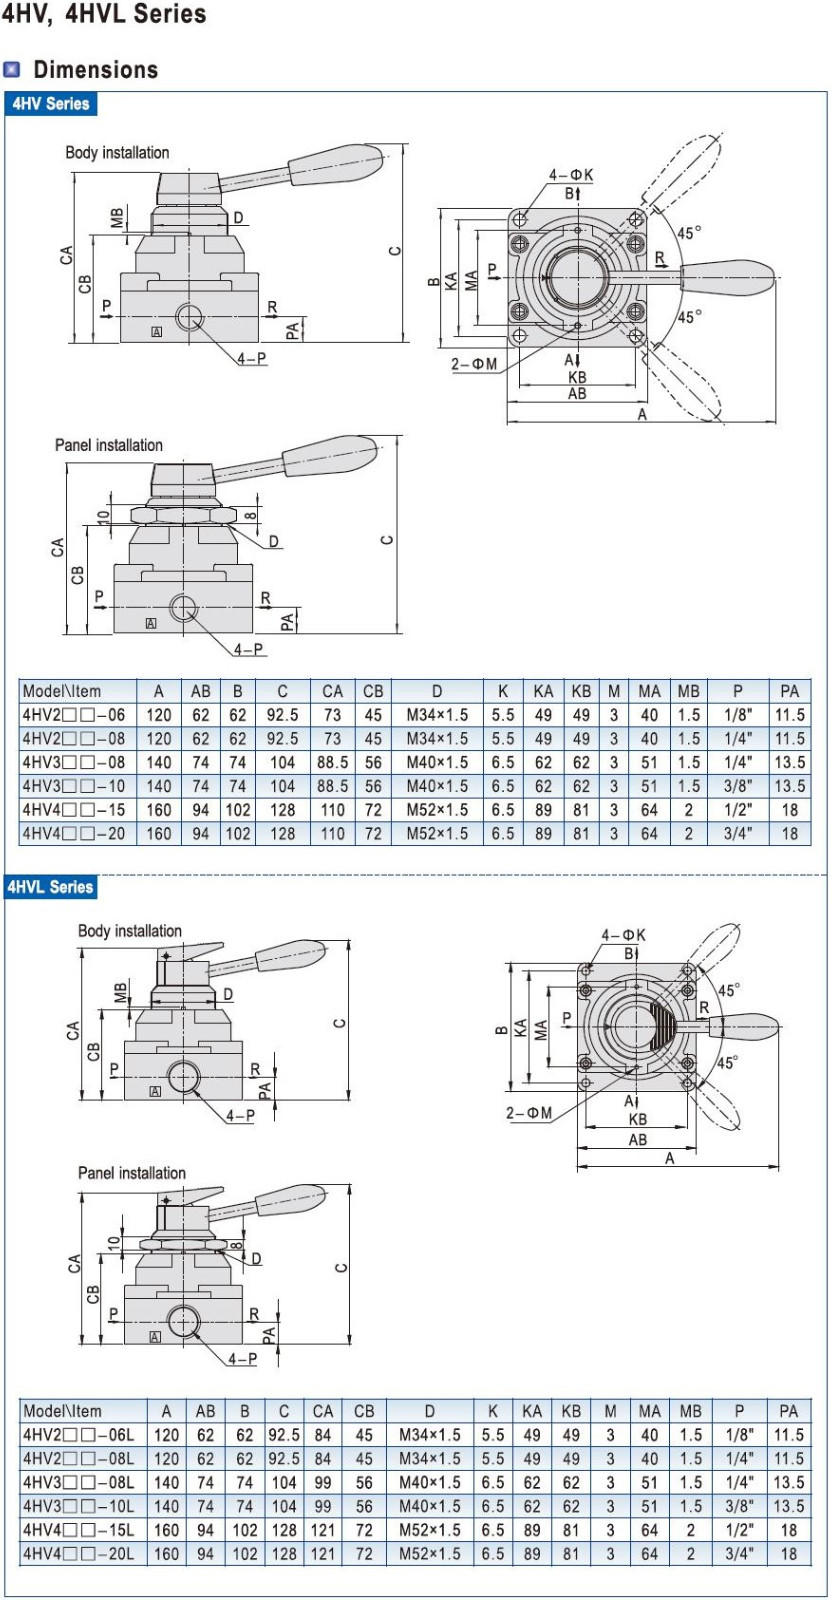 AIRWOLF cheapest price pneumatic manual control valve control bulk production